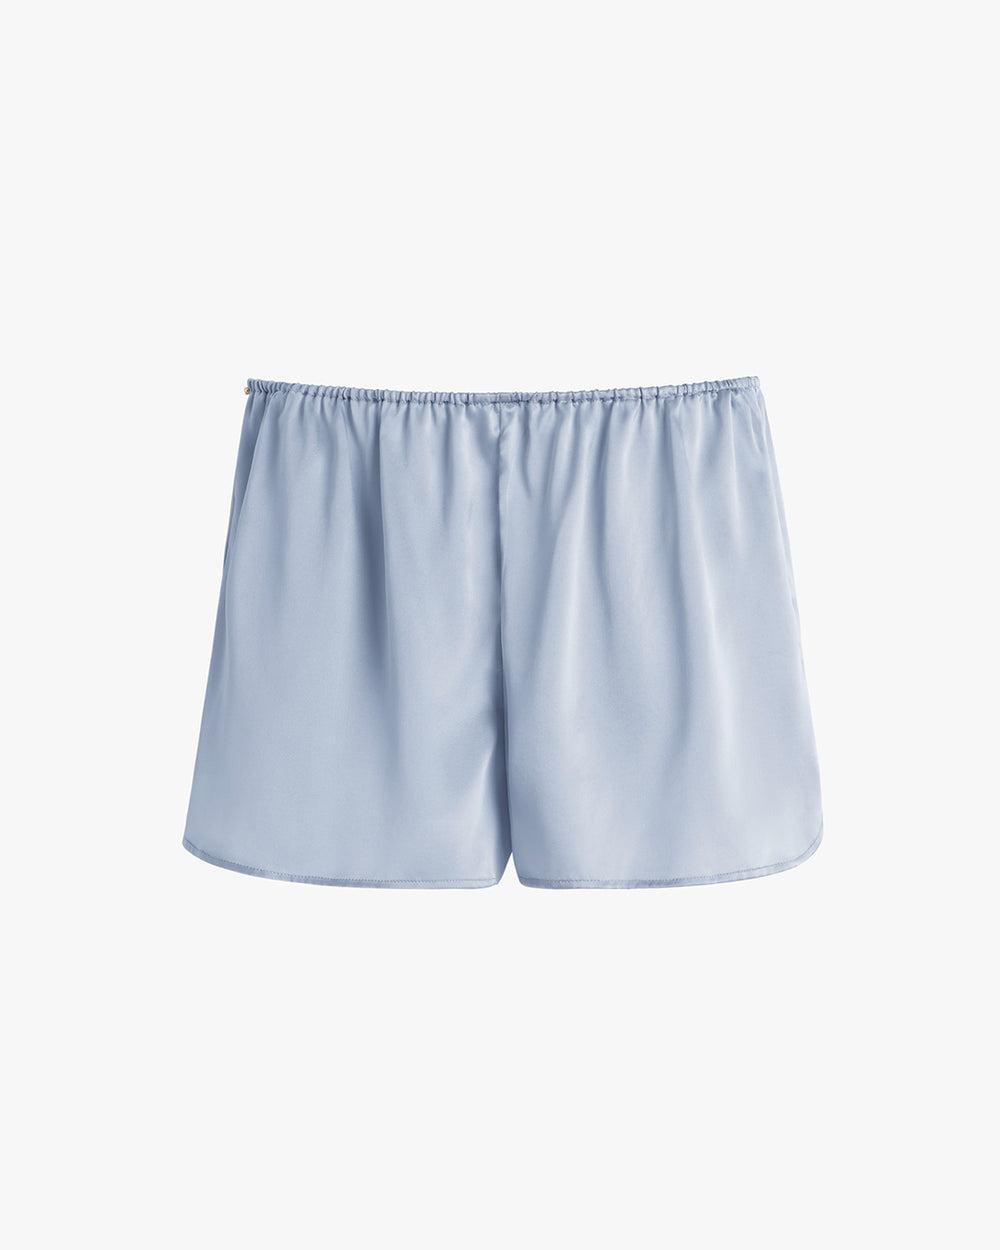 Shorts with an elastic waistband on a plain background.